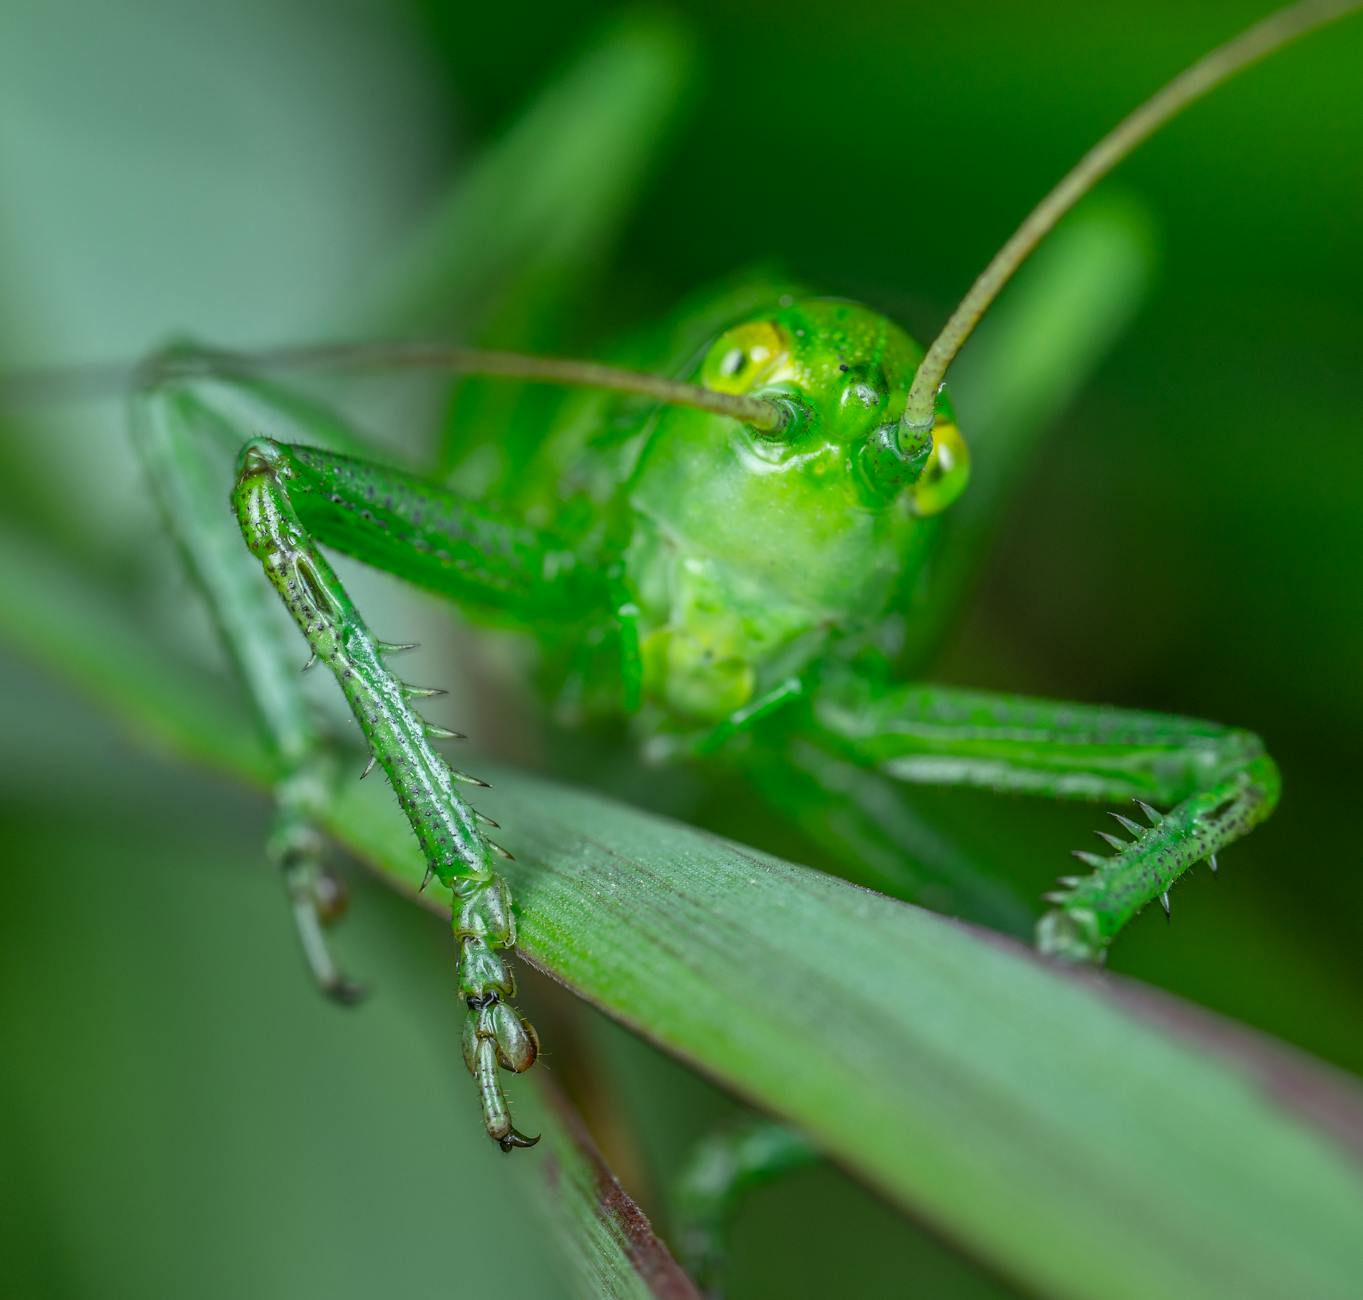 Green grasshopper on grass in nature